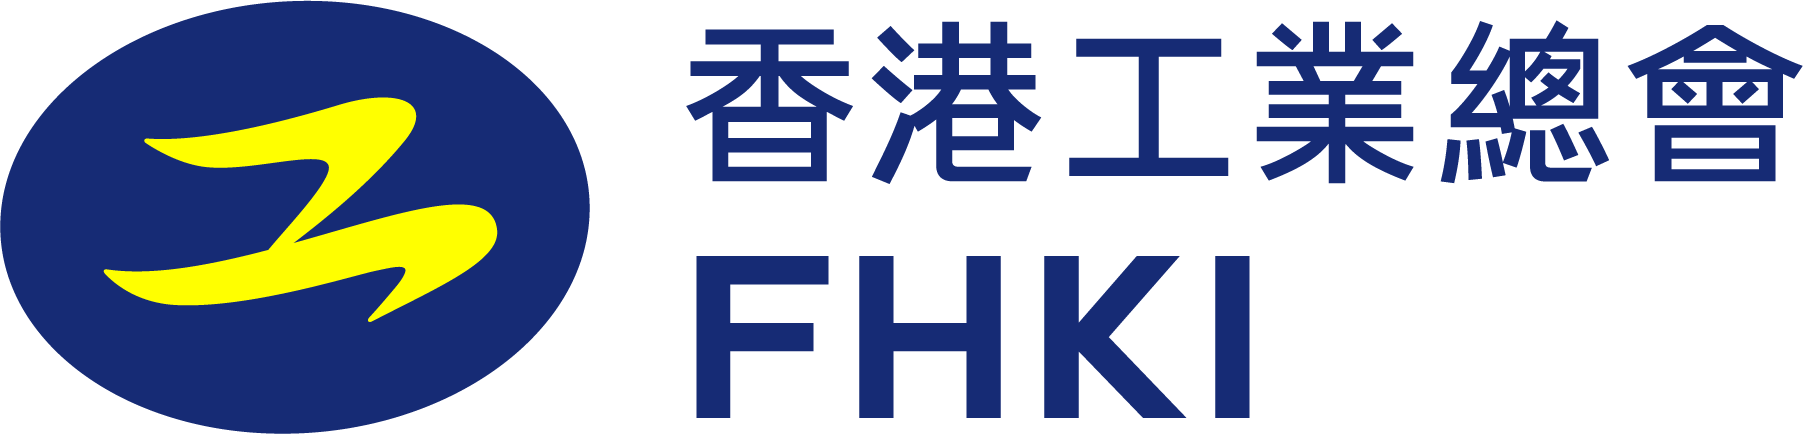 Self Photos / Files - FHKI Short Logo RGB-1